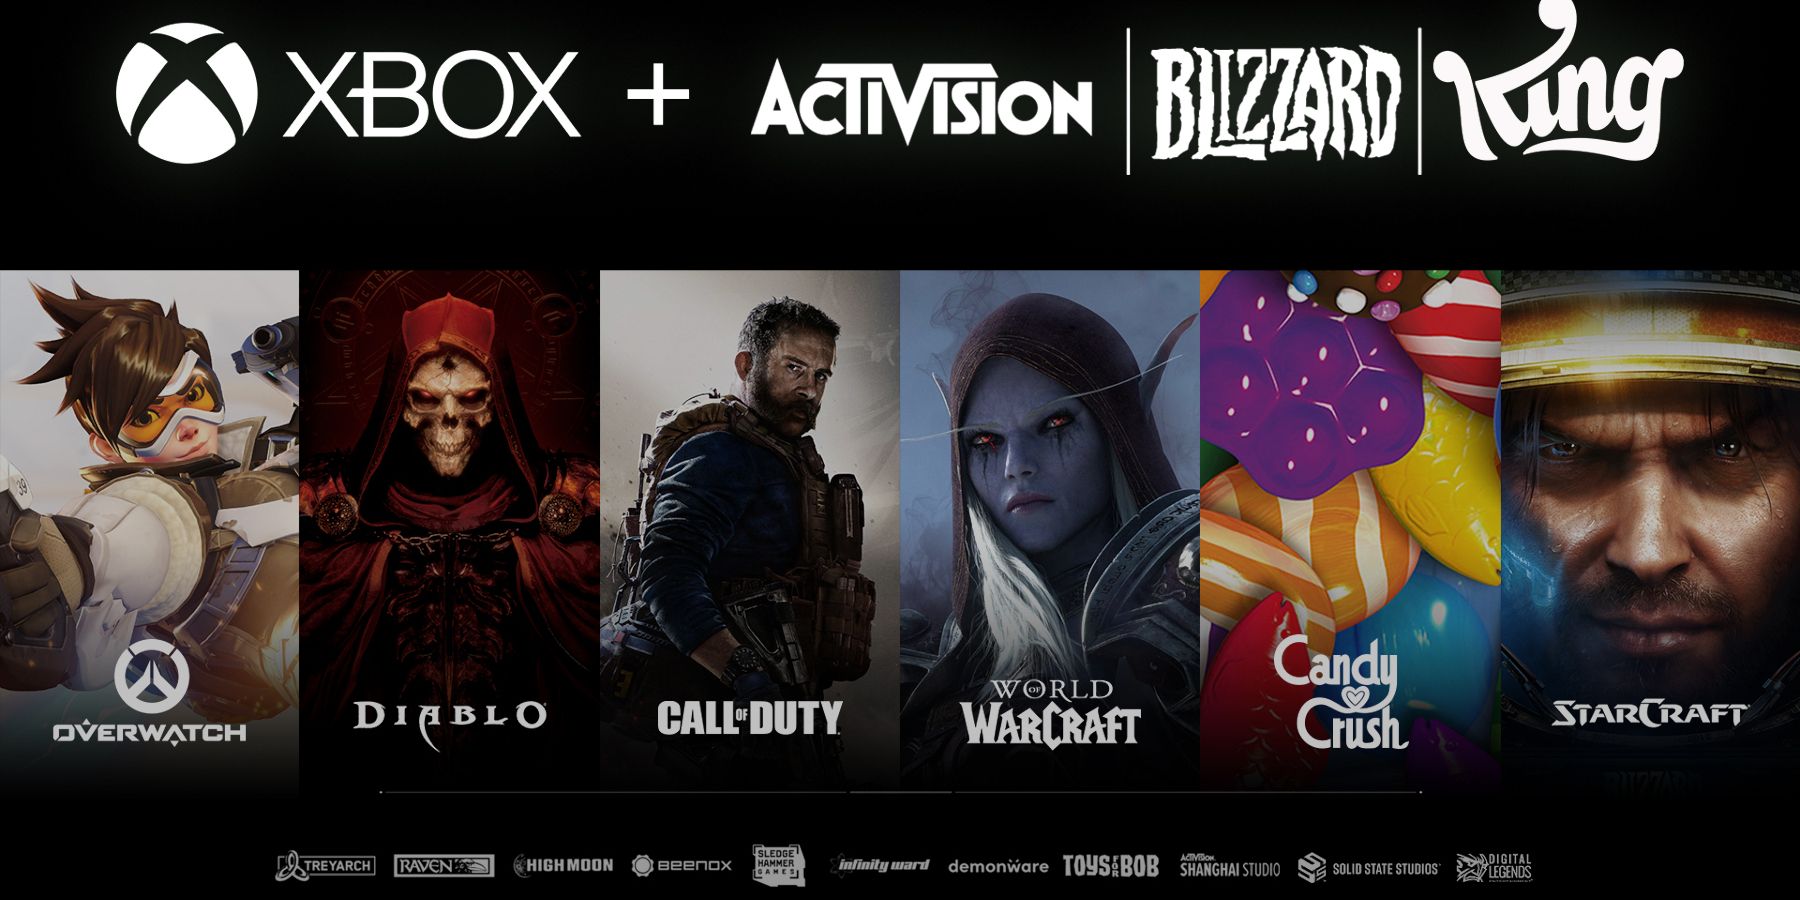 xbox + activision | blizzard | king